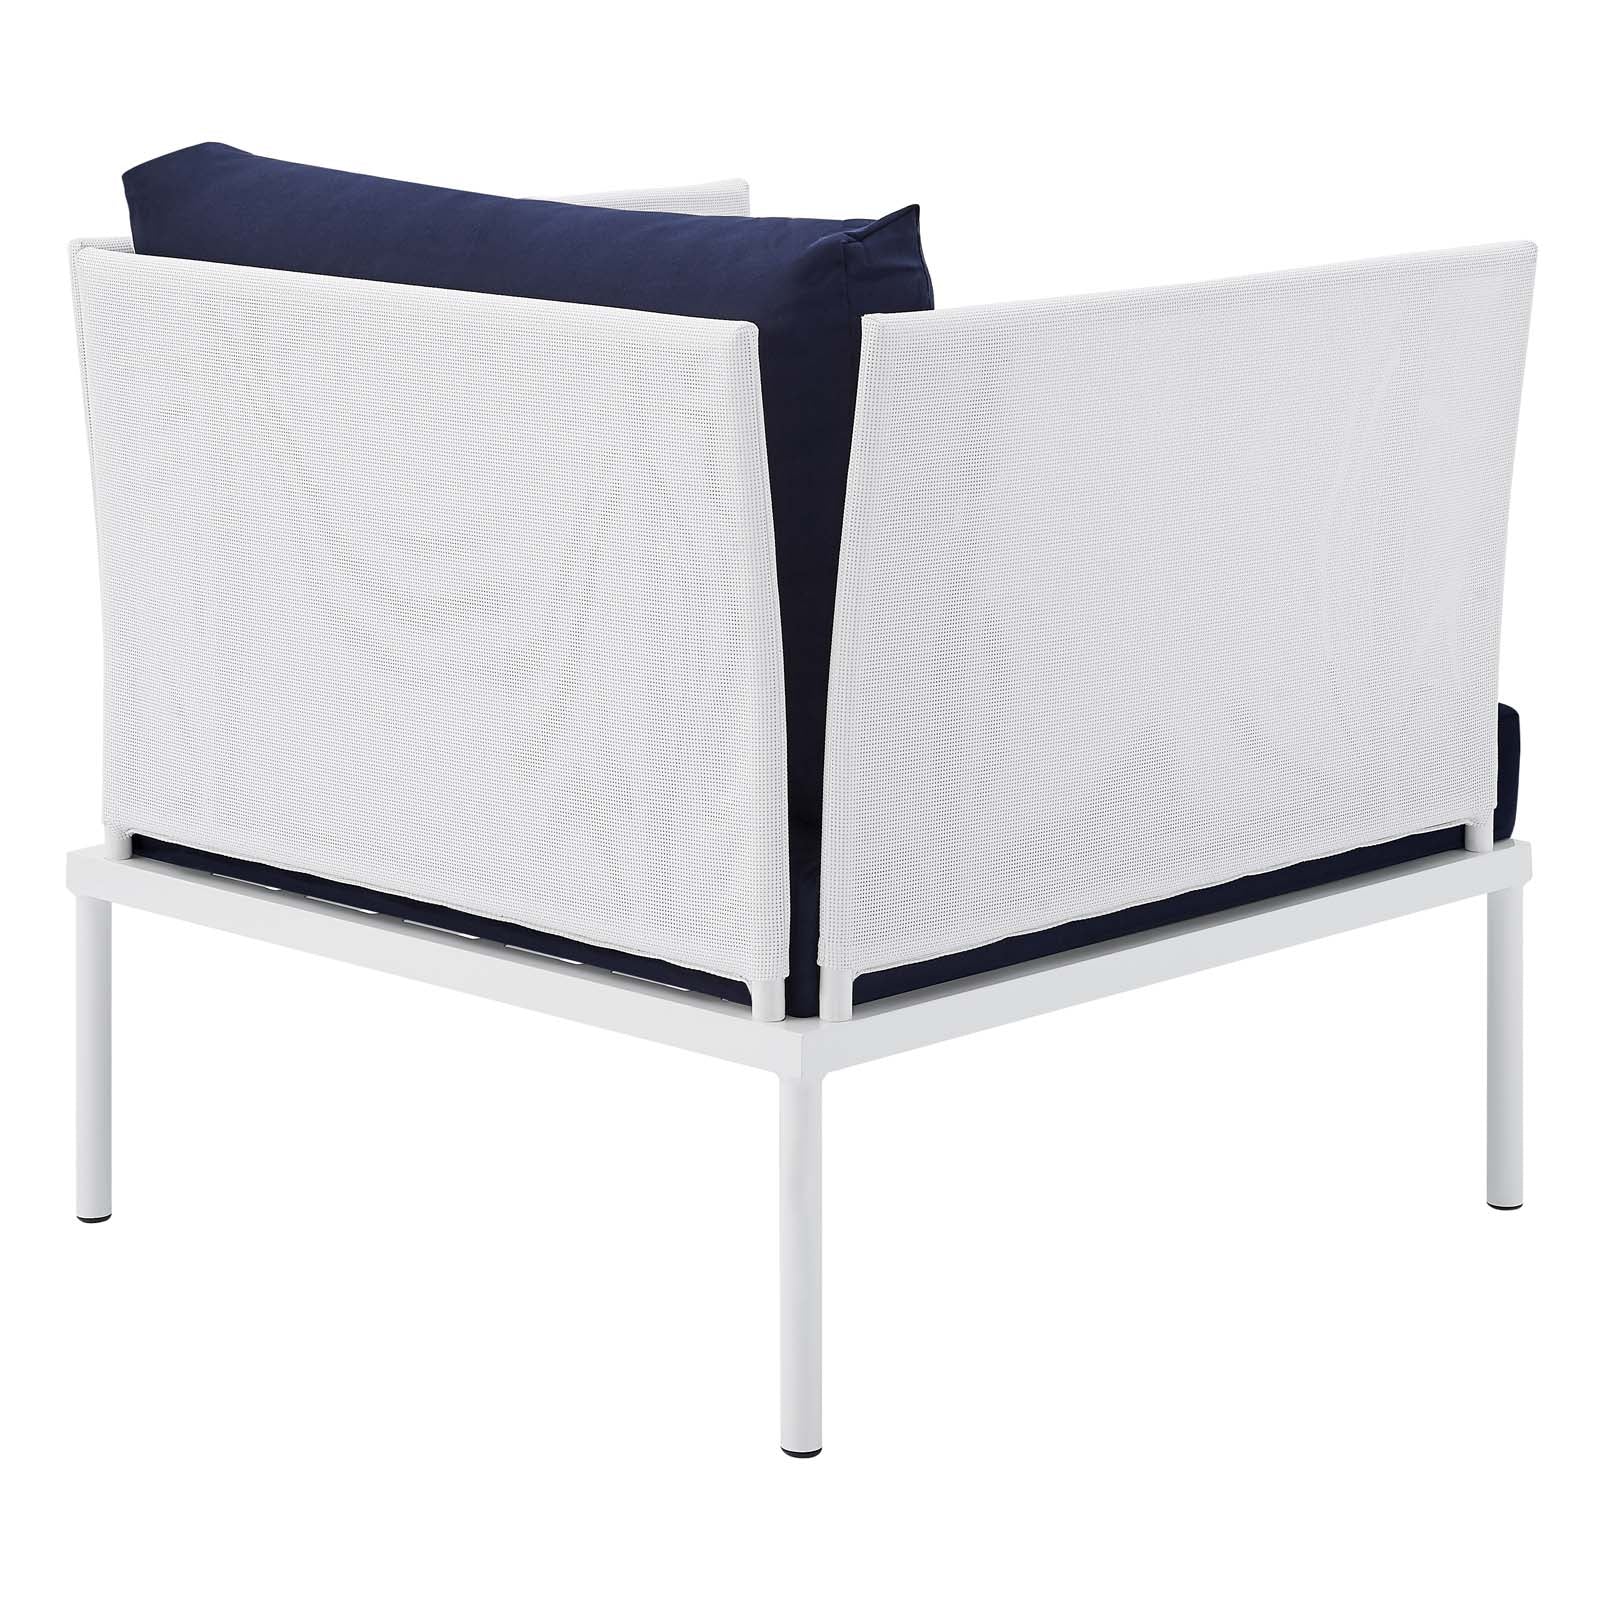 Modway Outdoor Conversation Sets - Harmony 5-Piece Sunbrella Outdoor Patio Aluminum Furniture Set White Navy